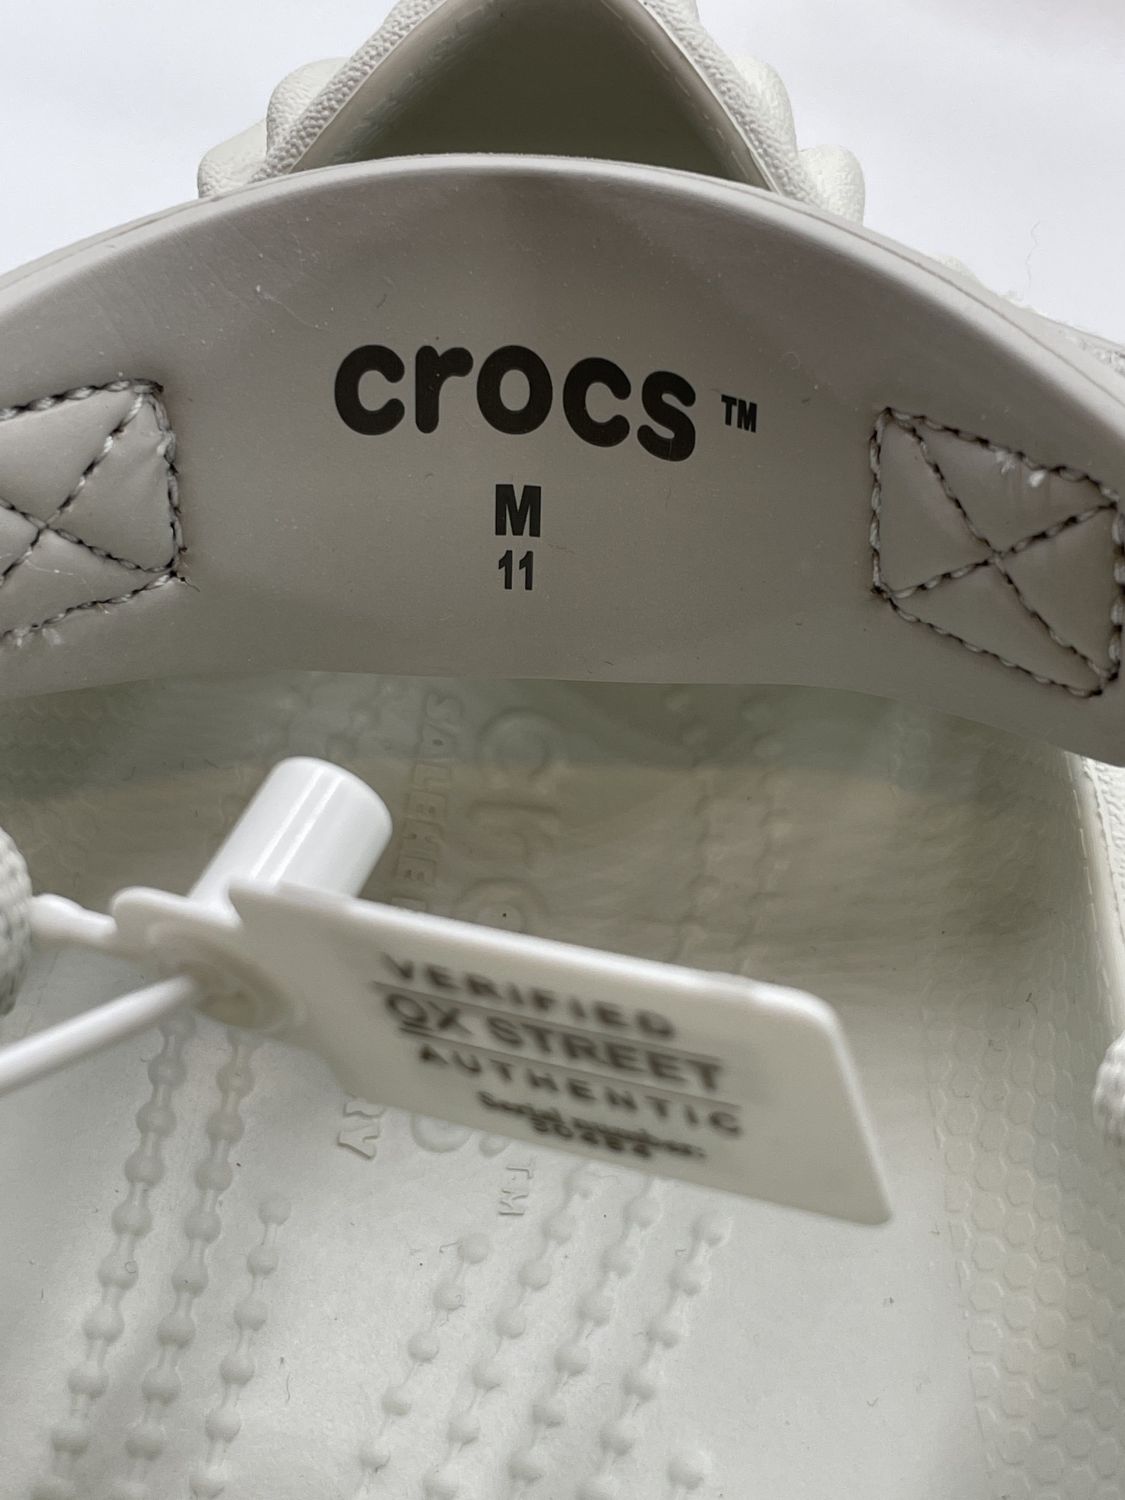 17113 - Crocs Pollex Clog By Salehe Bembury Stratus | Item Details ...